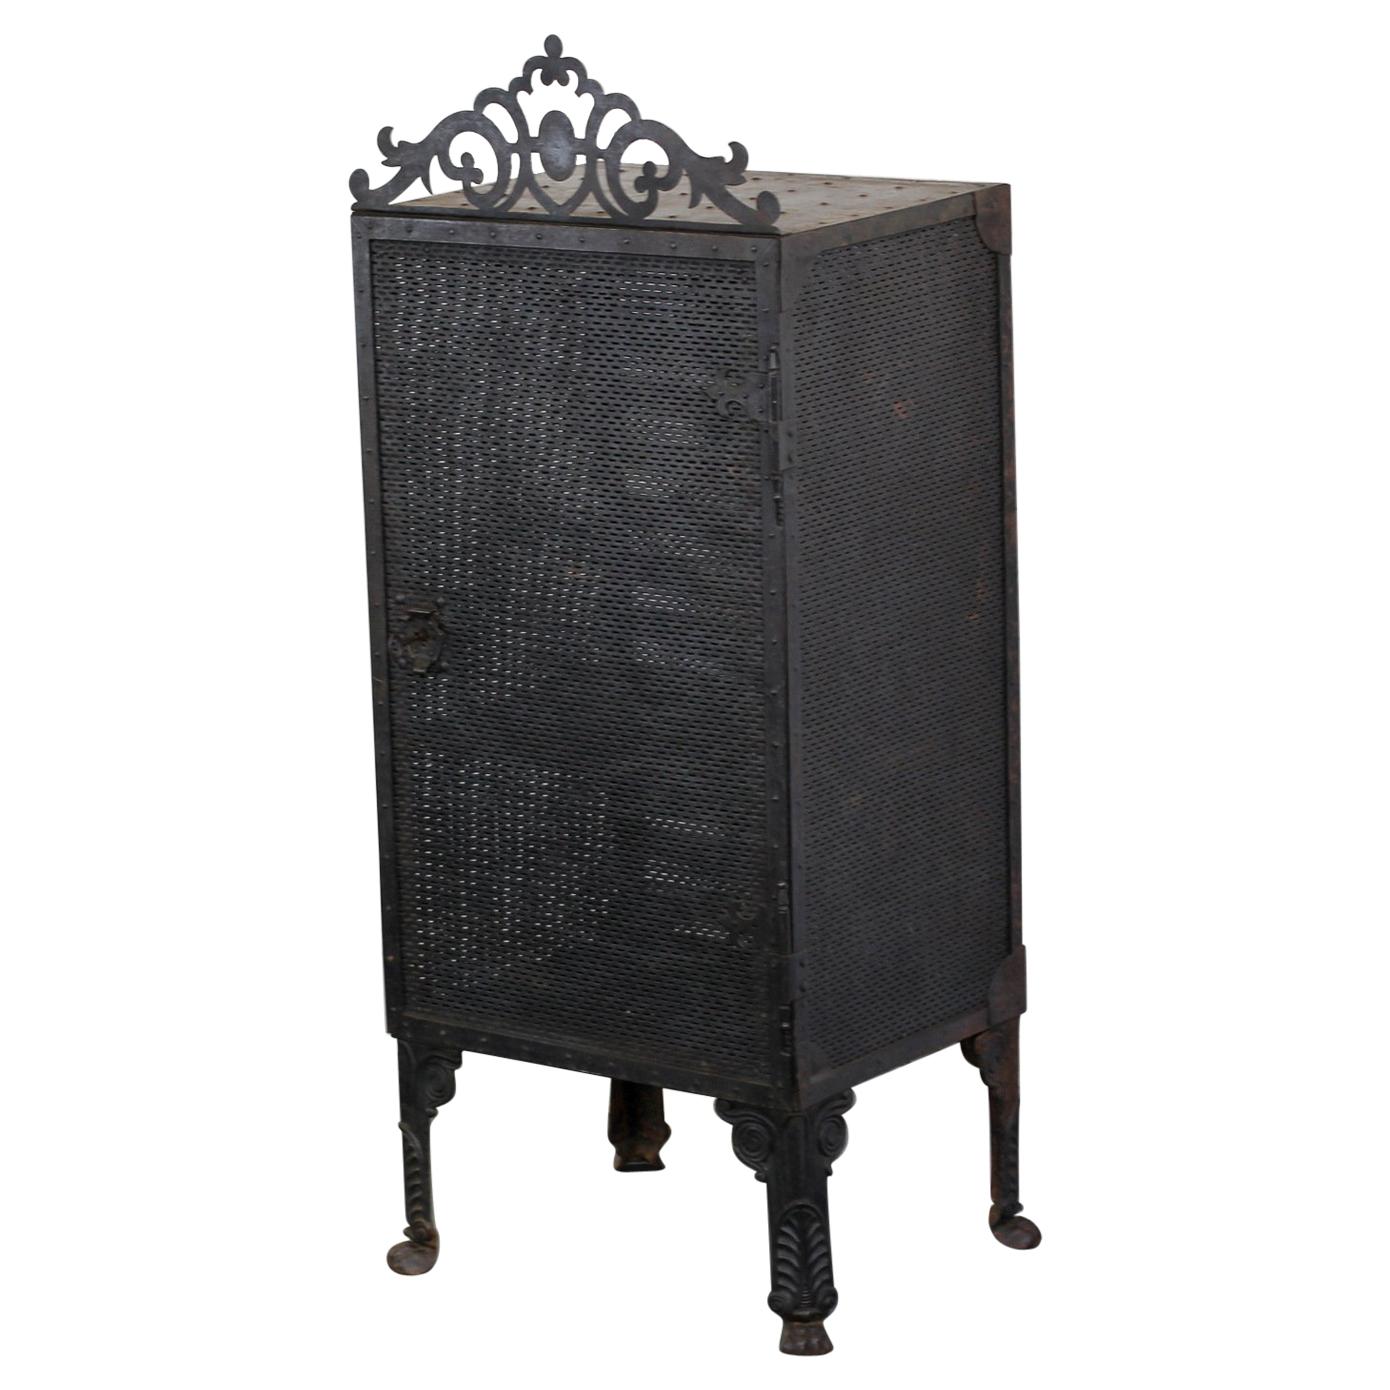 Gothic Revival Blacksmith Made Smoke Cabinet, circa 1880